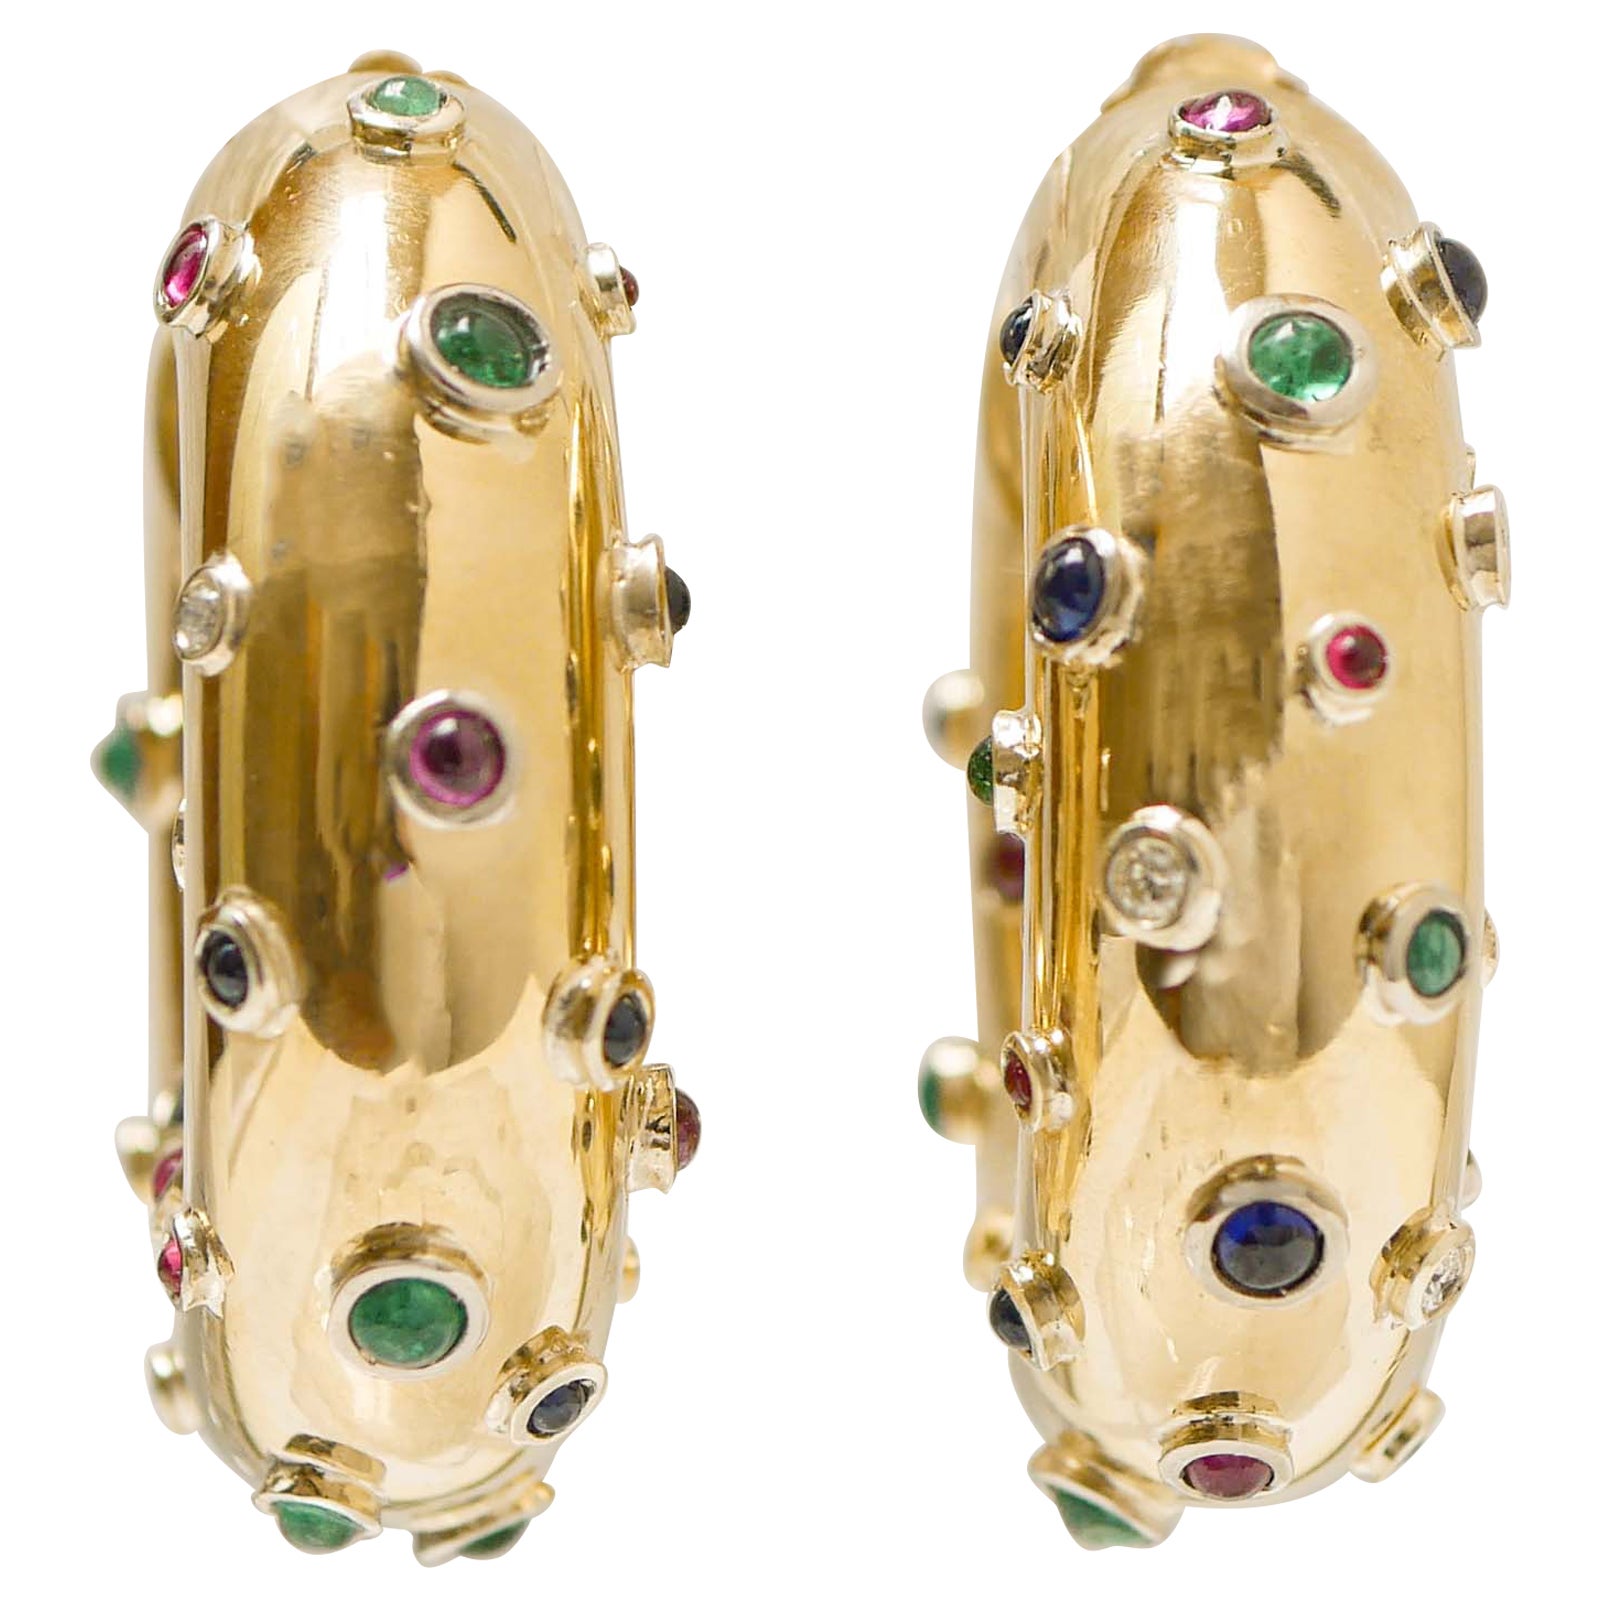 Rubies, Emeralds, Sapphires, Stones, Diamonds, 18 Karat Yellow Gold Earrings.